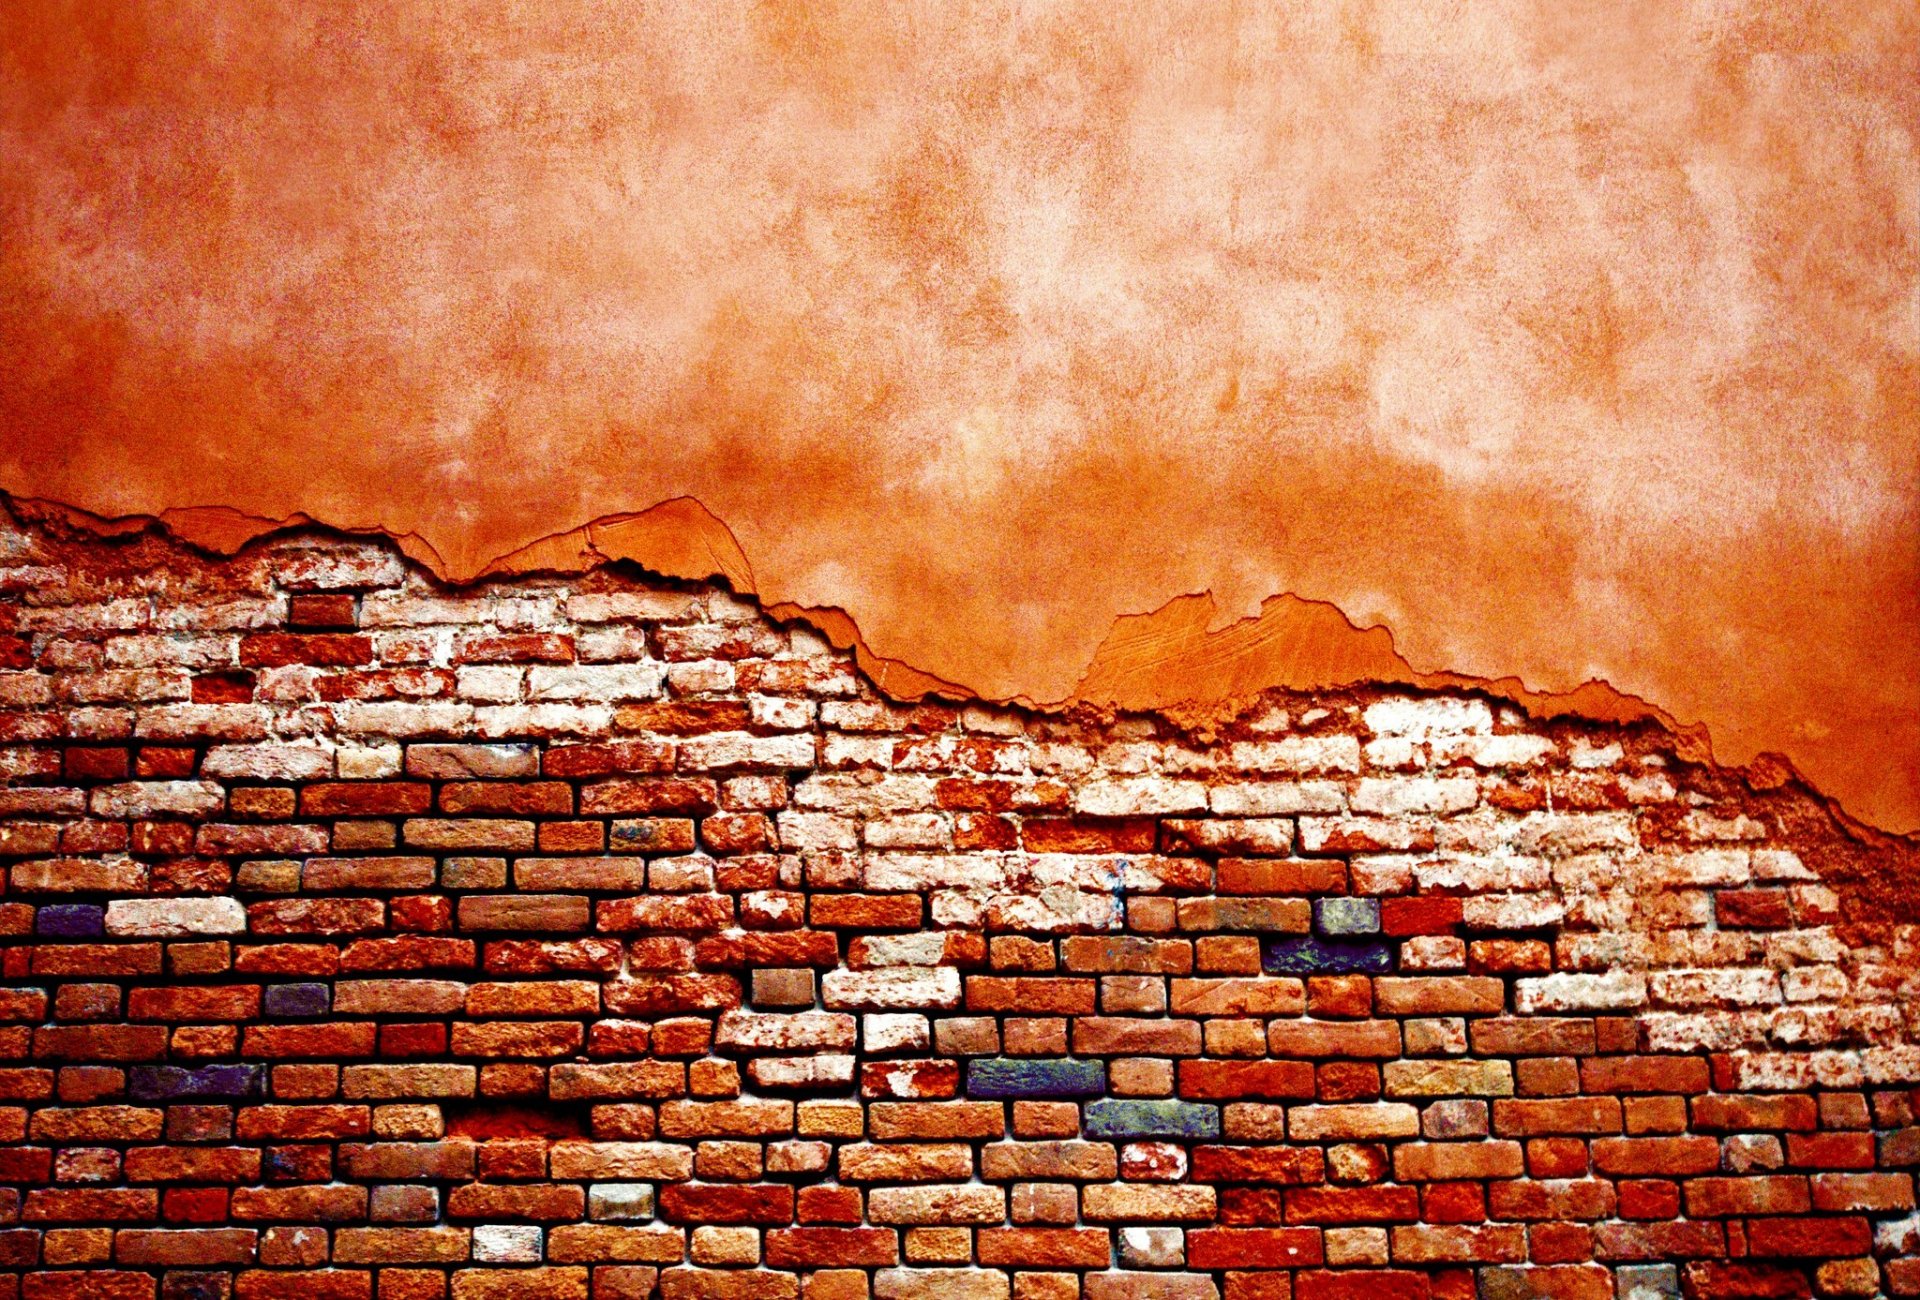 the wall wallpaper,brickwork,brick,wall,red,orange